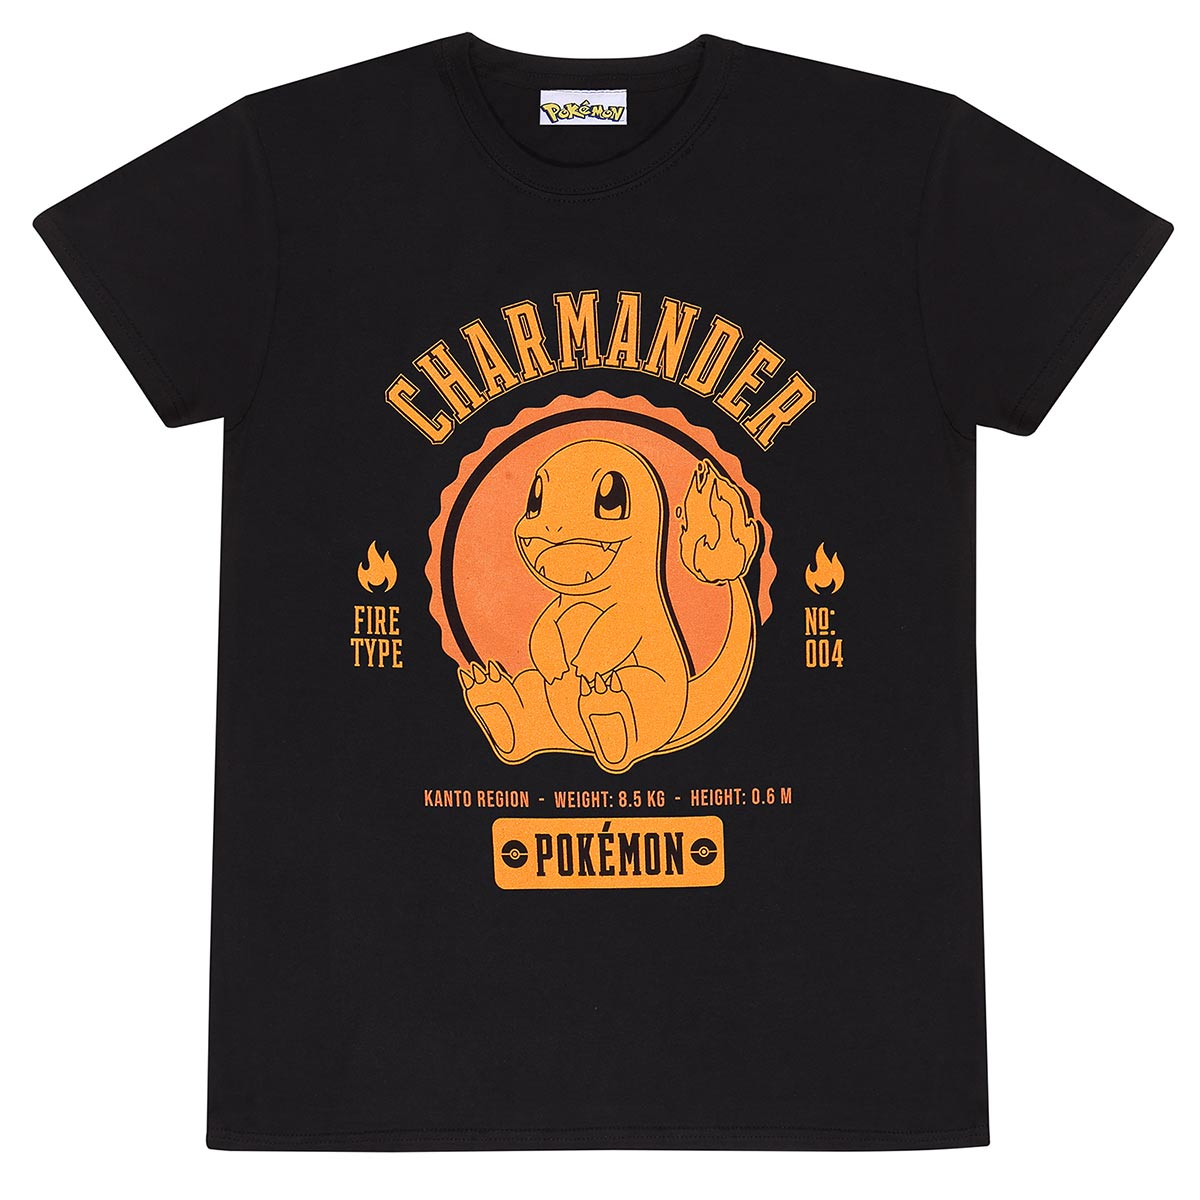 Pokémon Collegiate Charmander T-Shirt